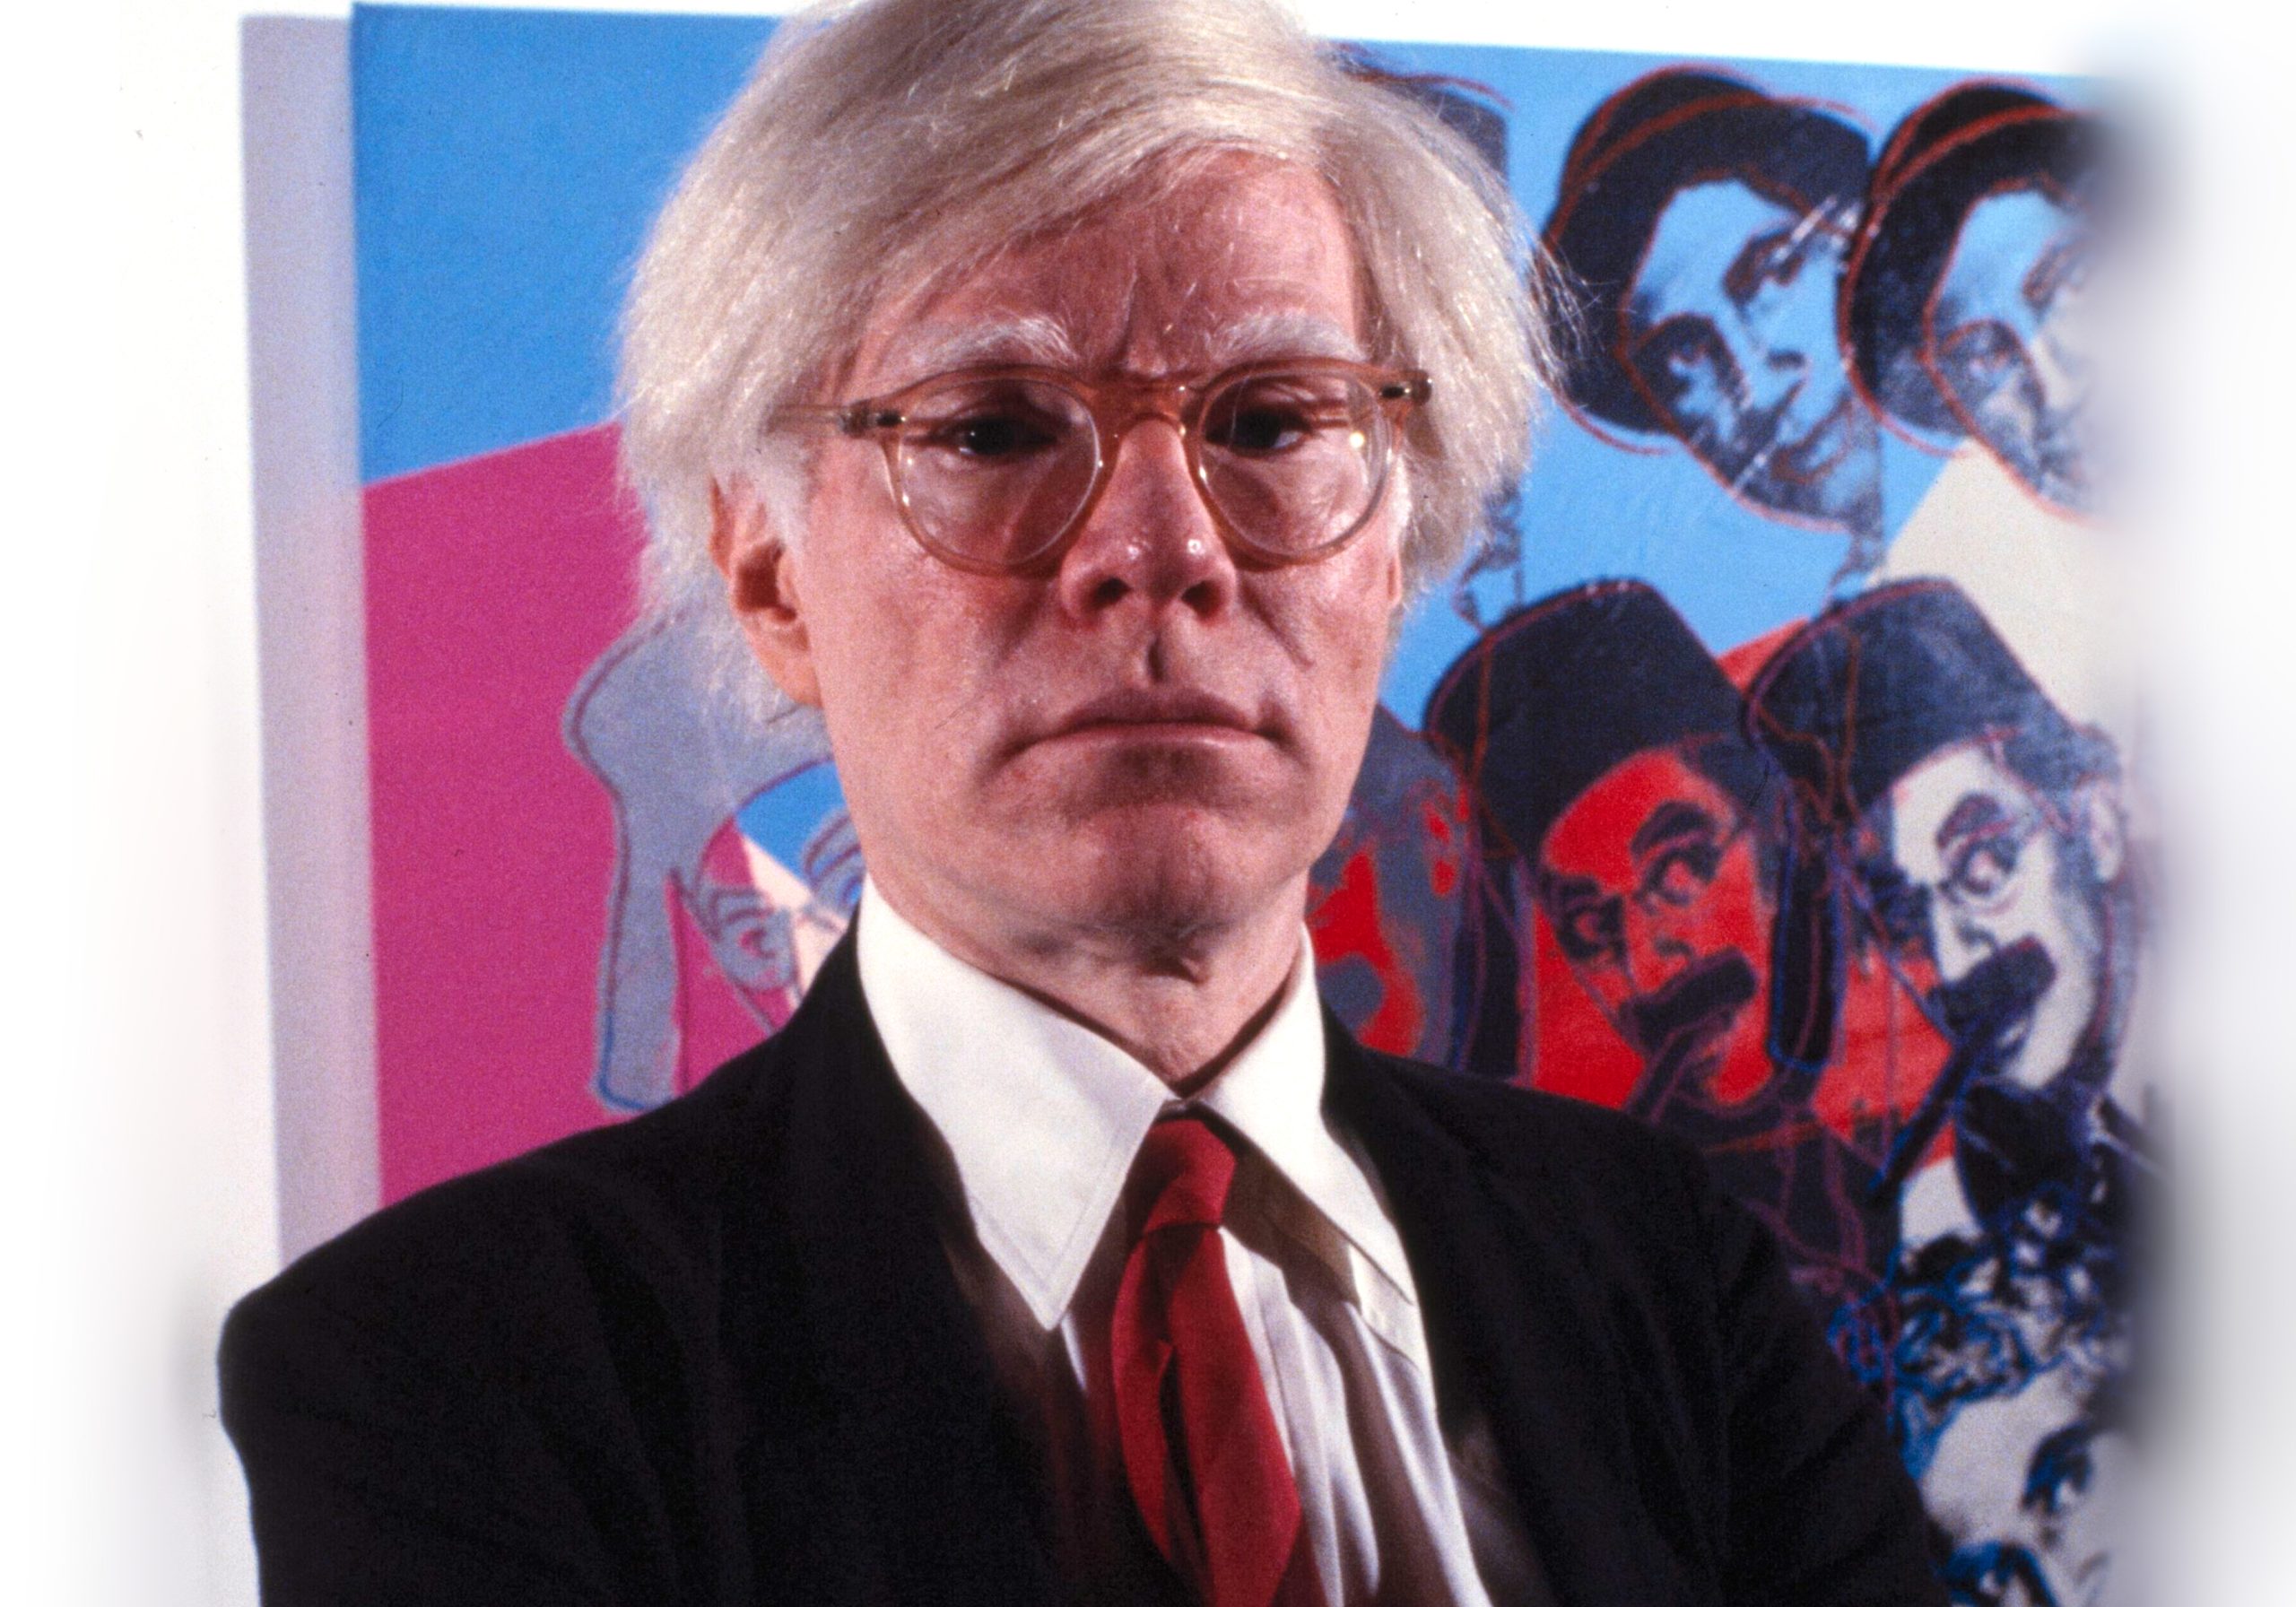 Andy Warhol at the Jewsih Museum, photo by Bernard Gotfryd.